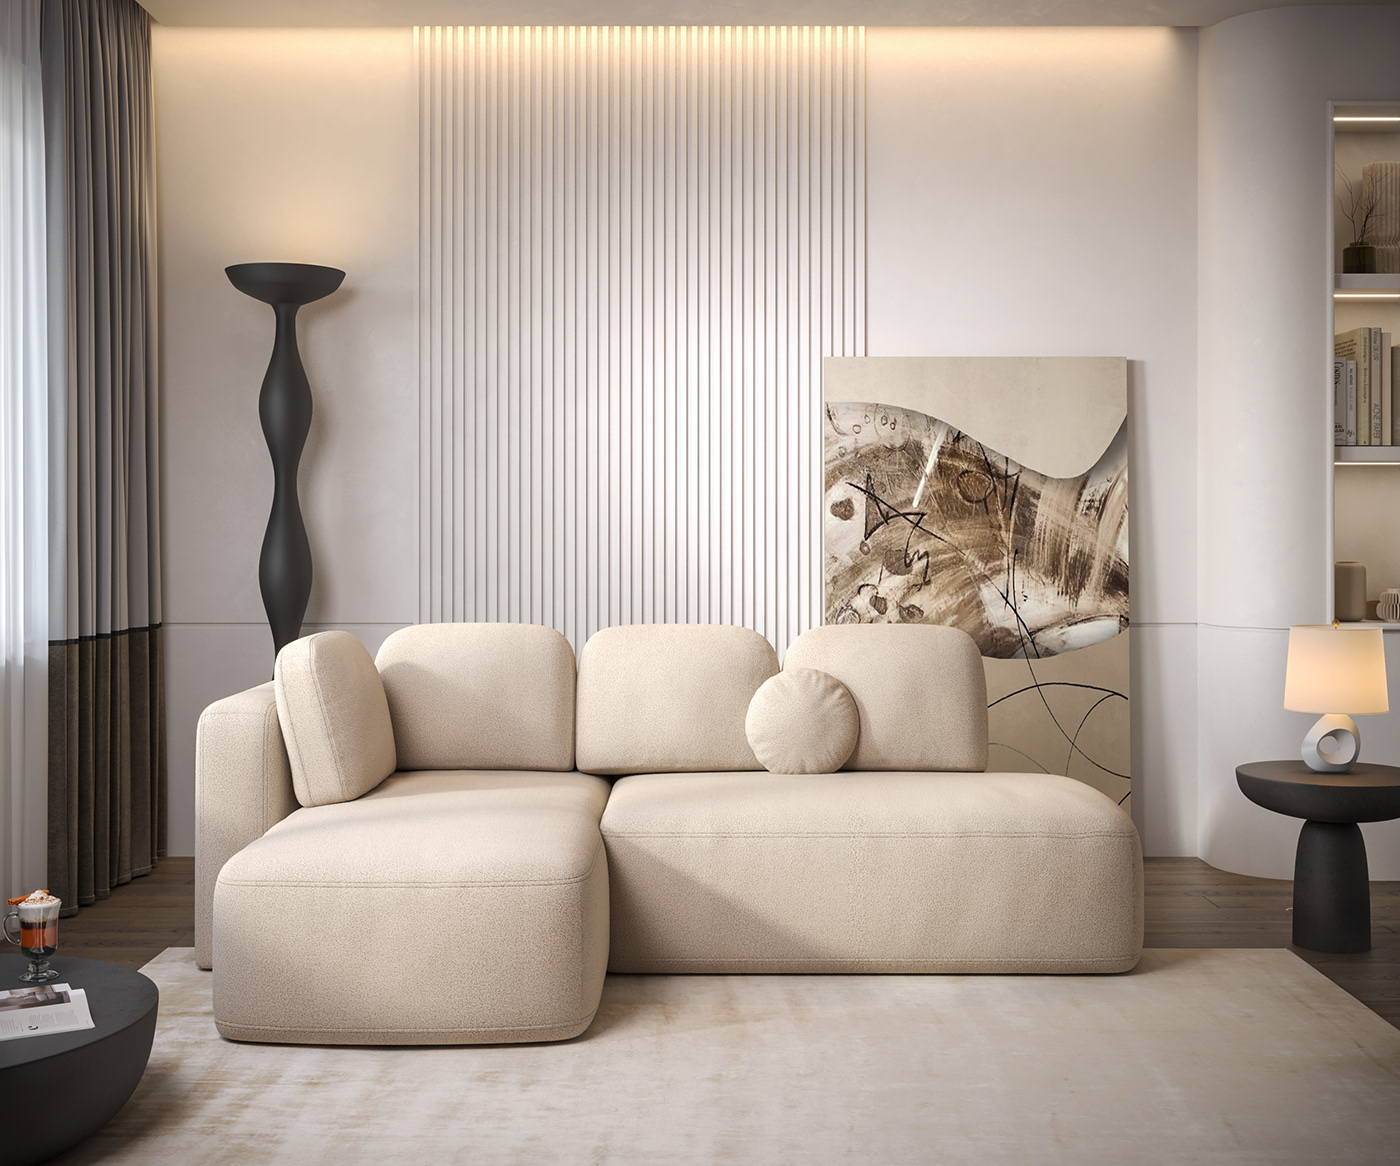 Sofa bed visualization modeling 3D 3ds max corona Render interior design  3d modeling